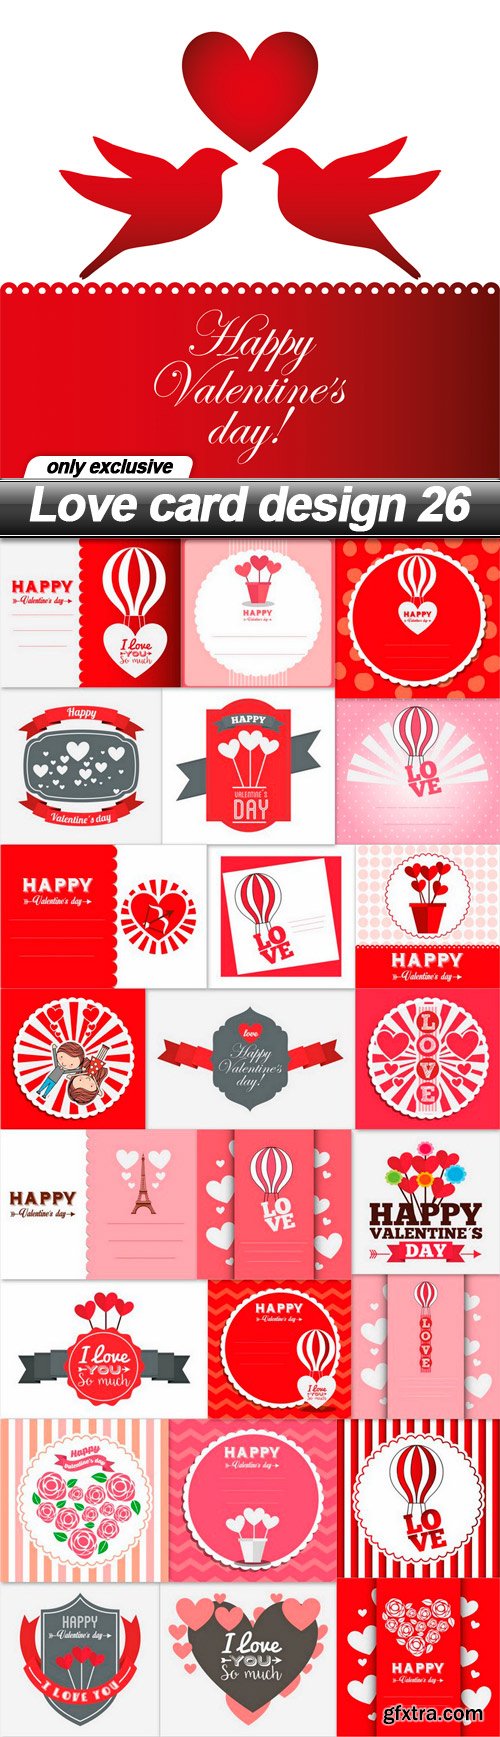 Love card design 26 - 25 EPS